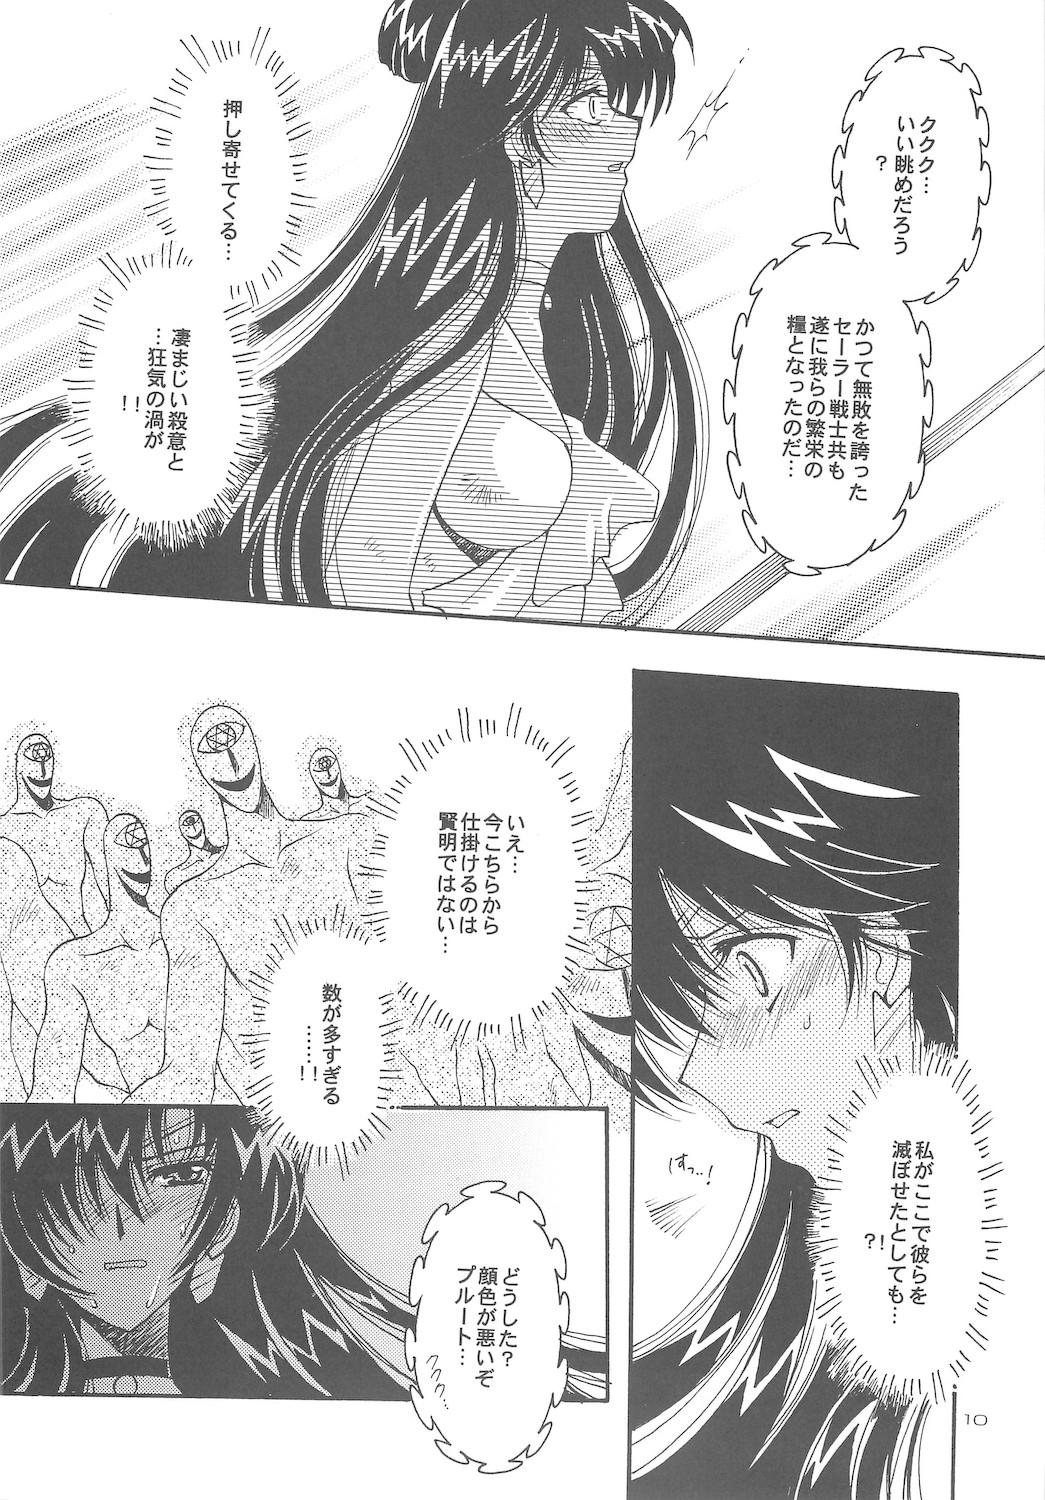 Pov Sex Owaru Sekai dai 4 shou - Sailor moon Load - Page 10